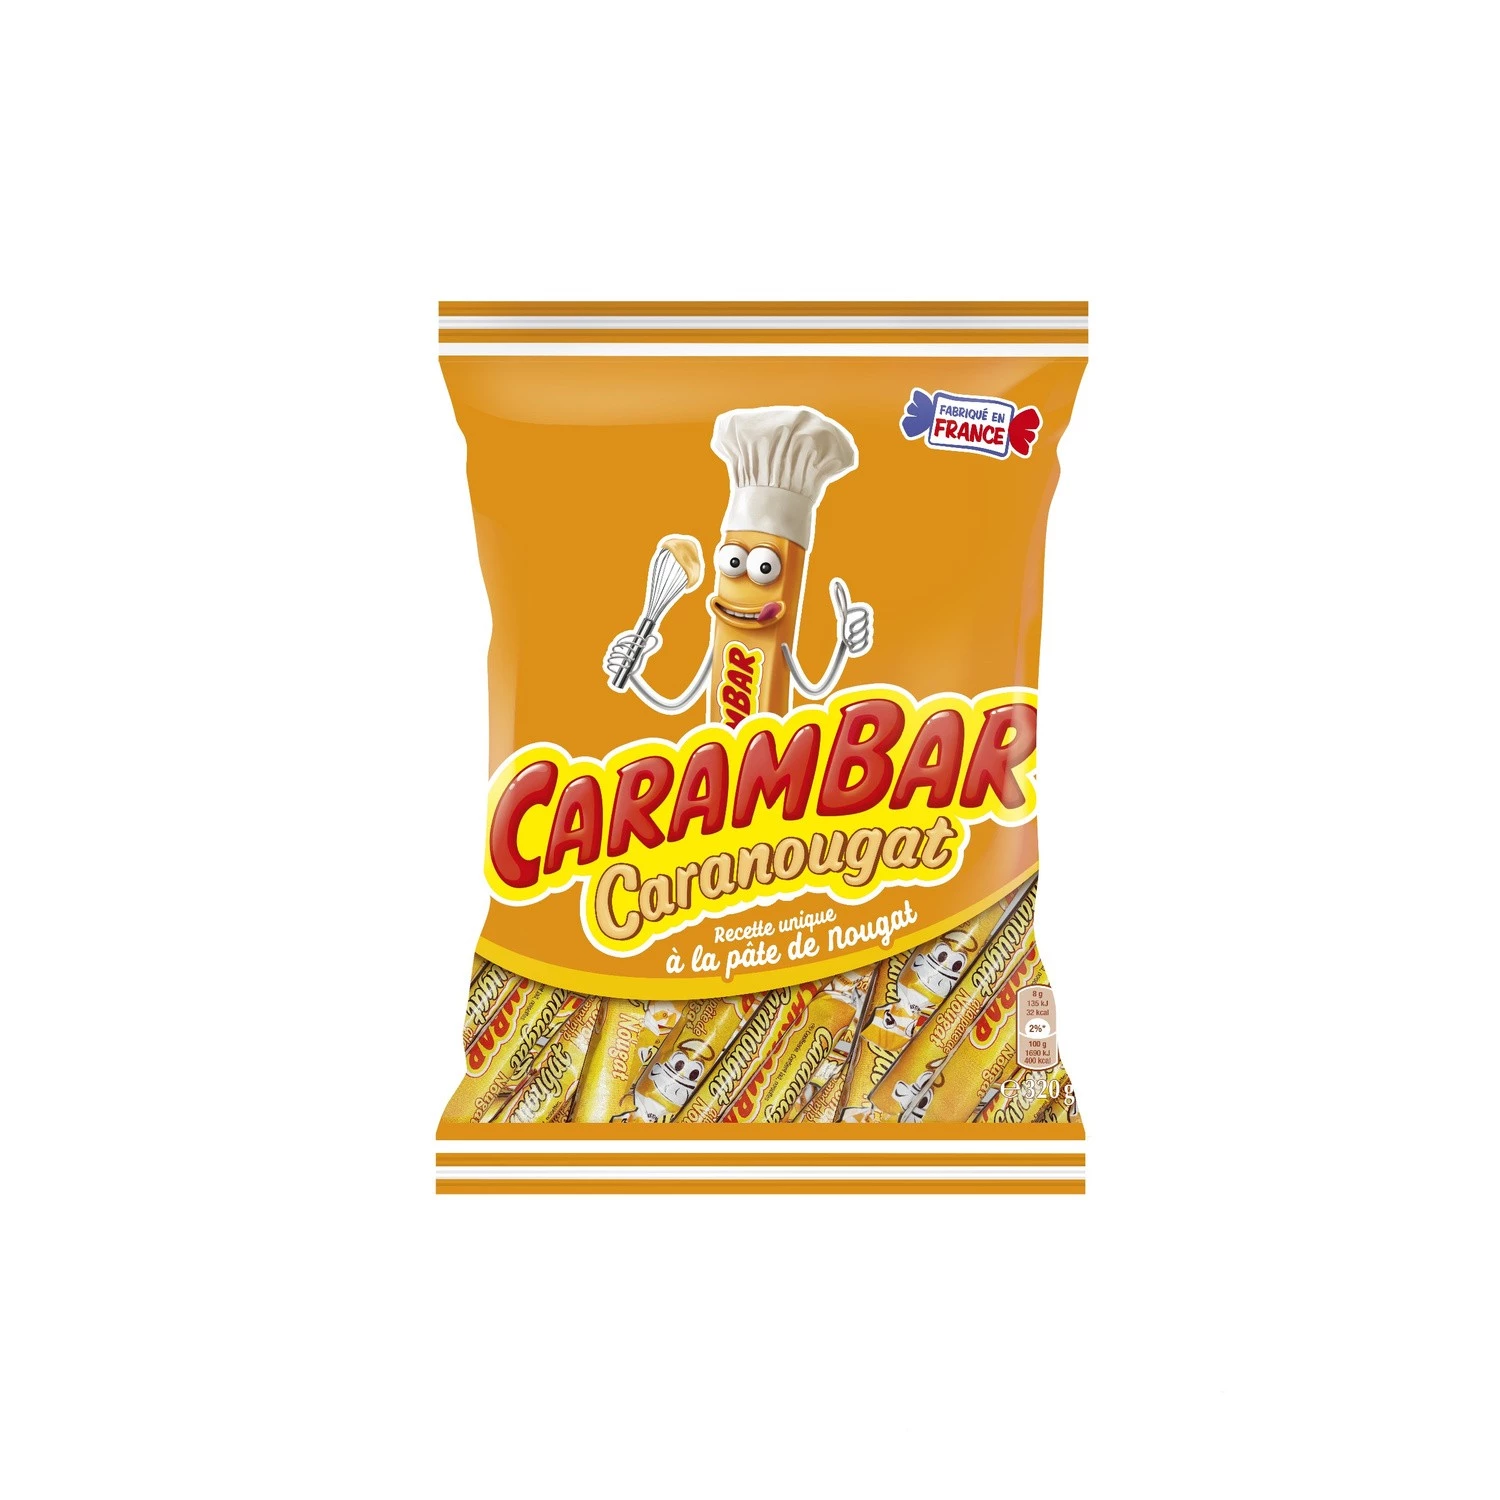 Bonbons caranougat 320g - CARAMBAR